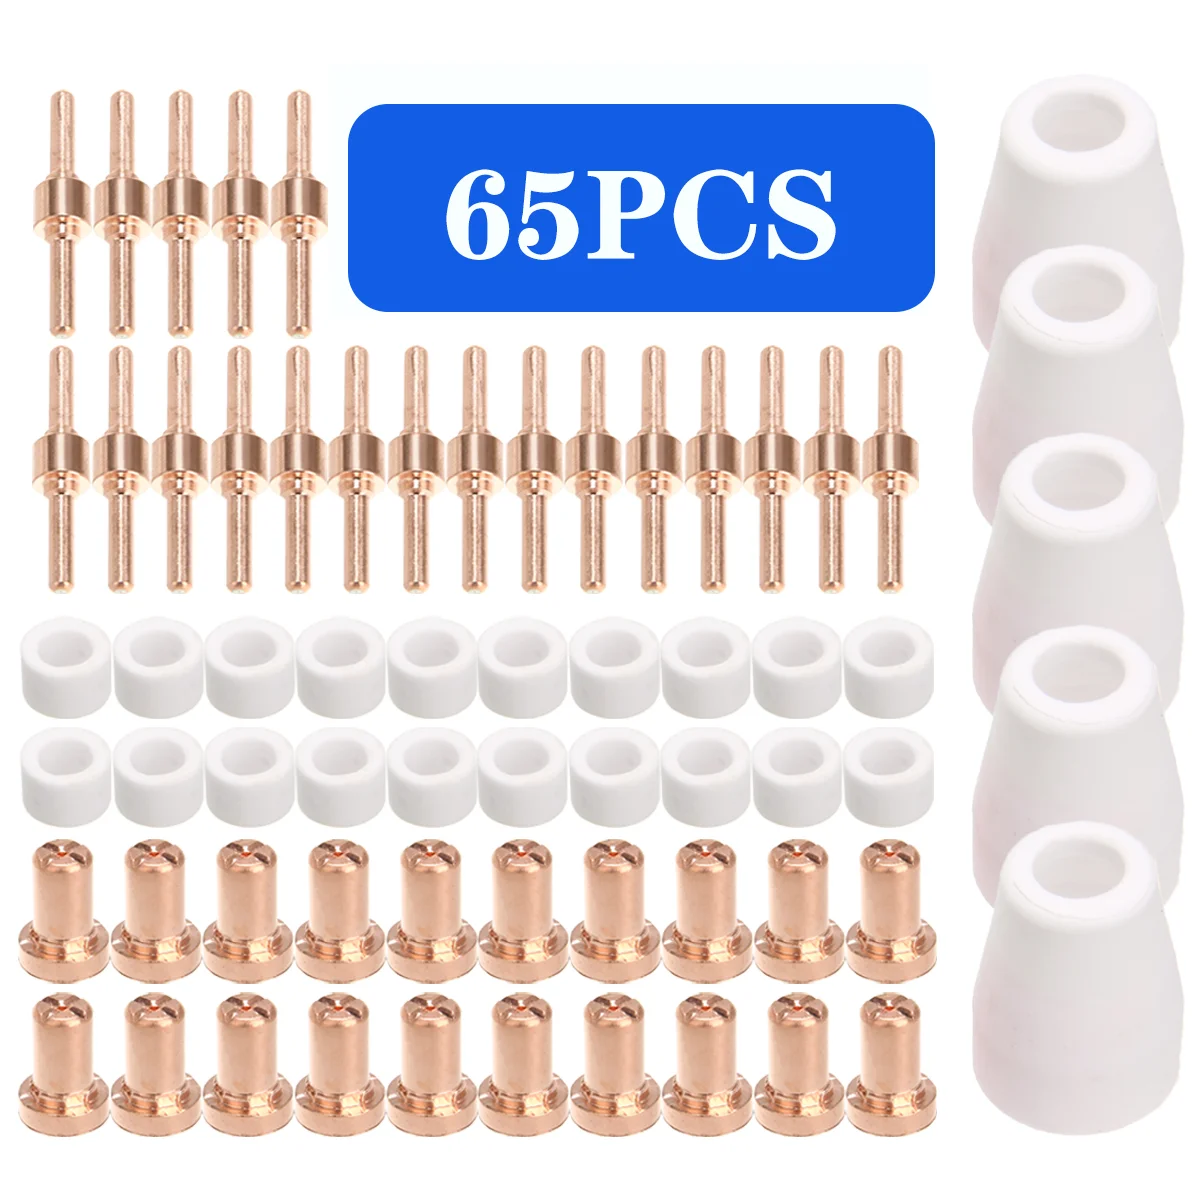 Kit de consumibles de antorcha cortador de Plasma PT31, 65 piezas, 30A/40A, corte de LG-50 50/60, Kits de antorcha, puntas extendidas, boquillas, Electrodos